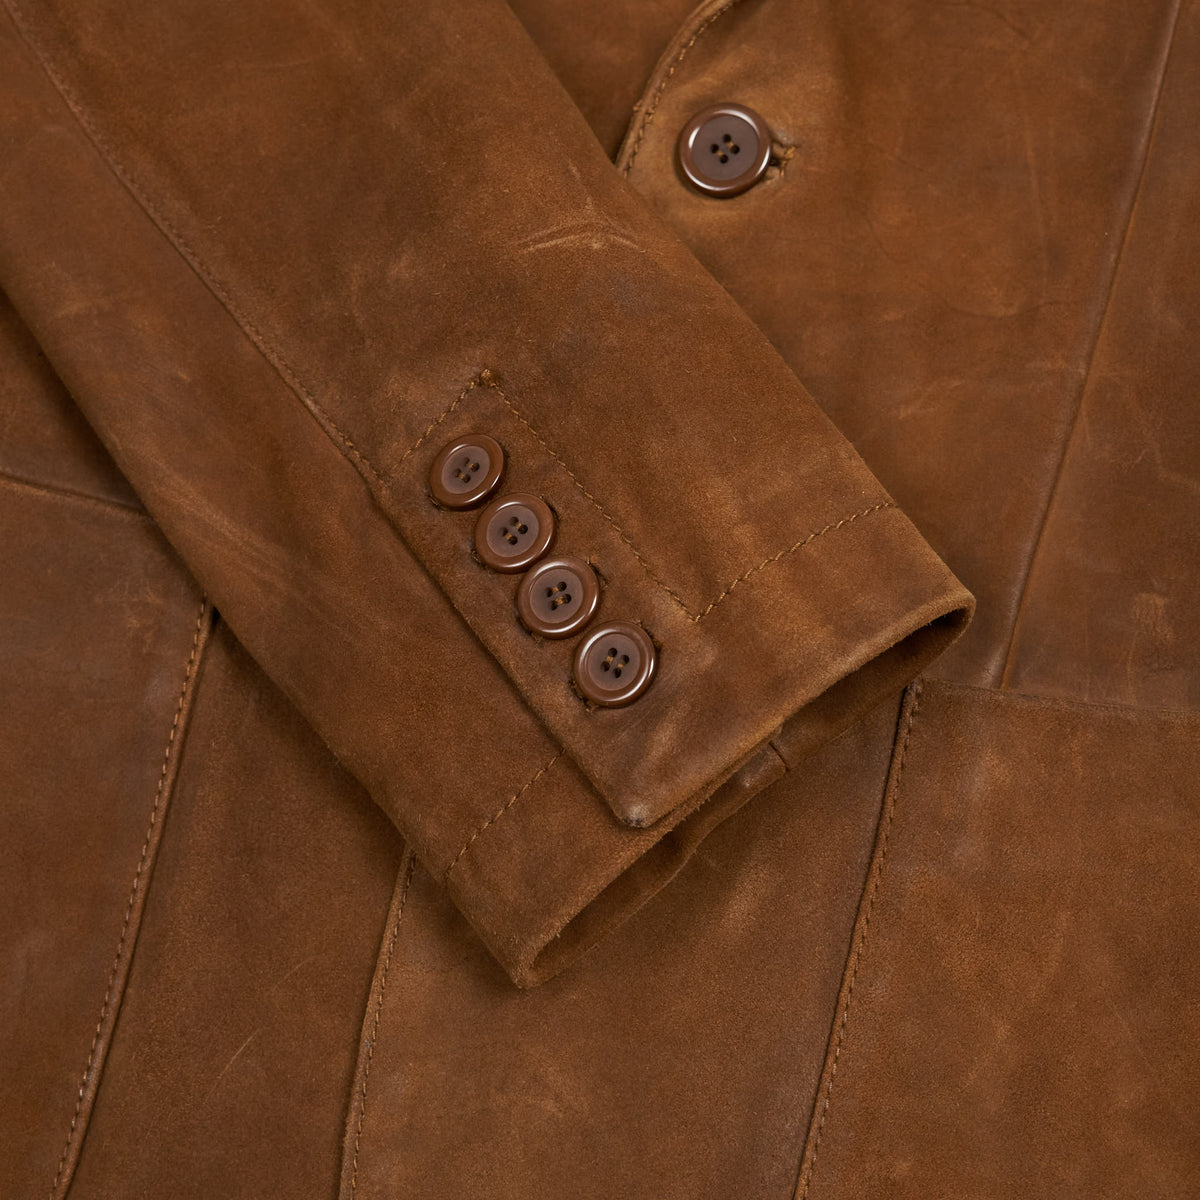 DeeCee style Leather Blazer